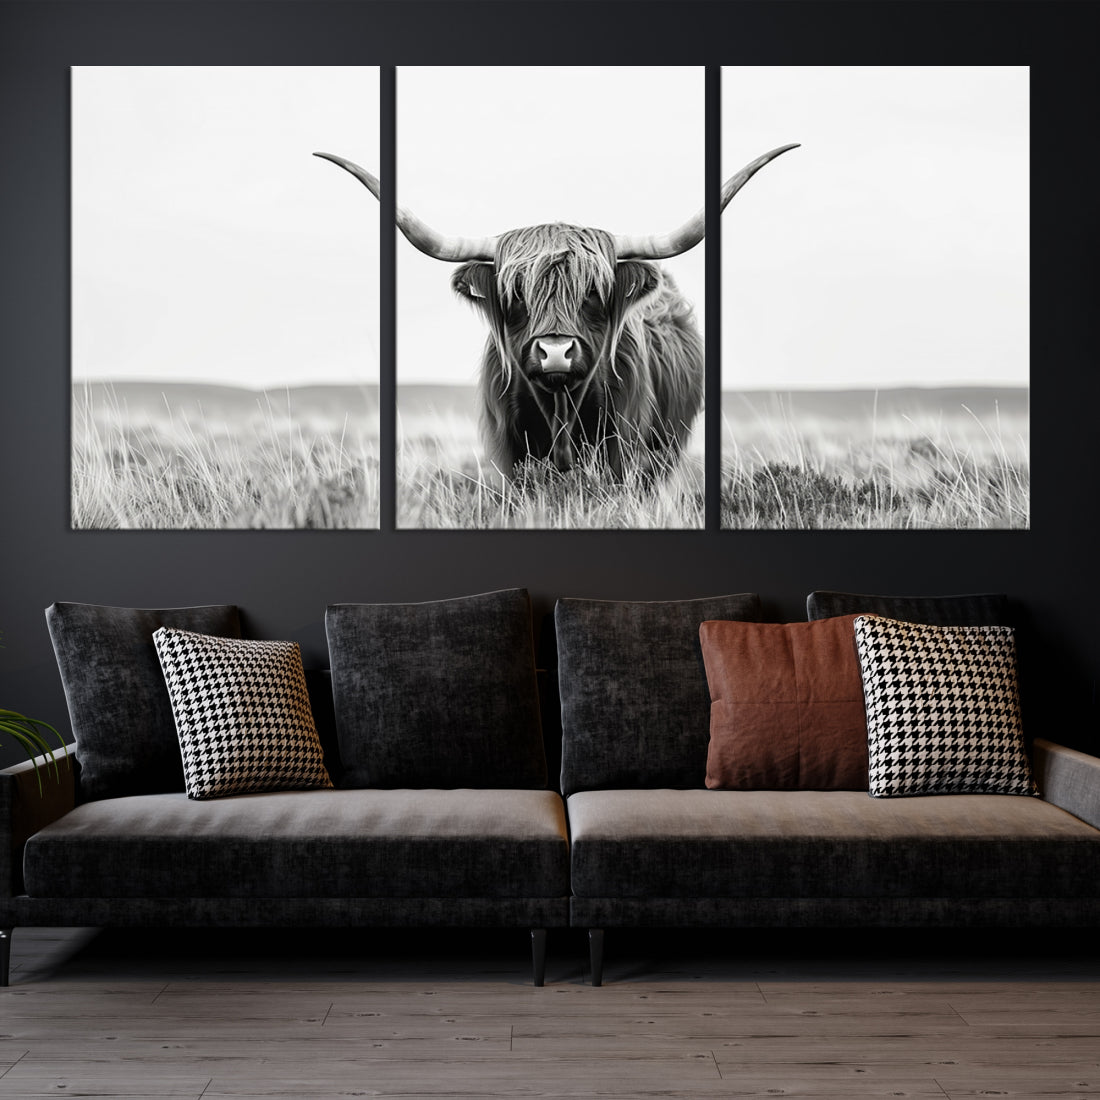 Scottish Highland Cow Wall Art Canvas Print